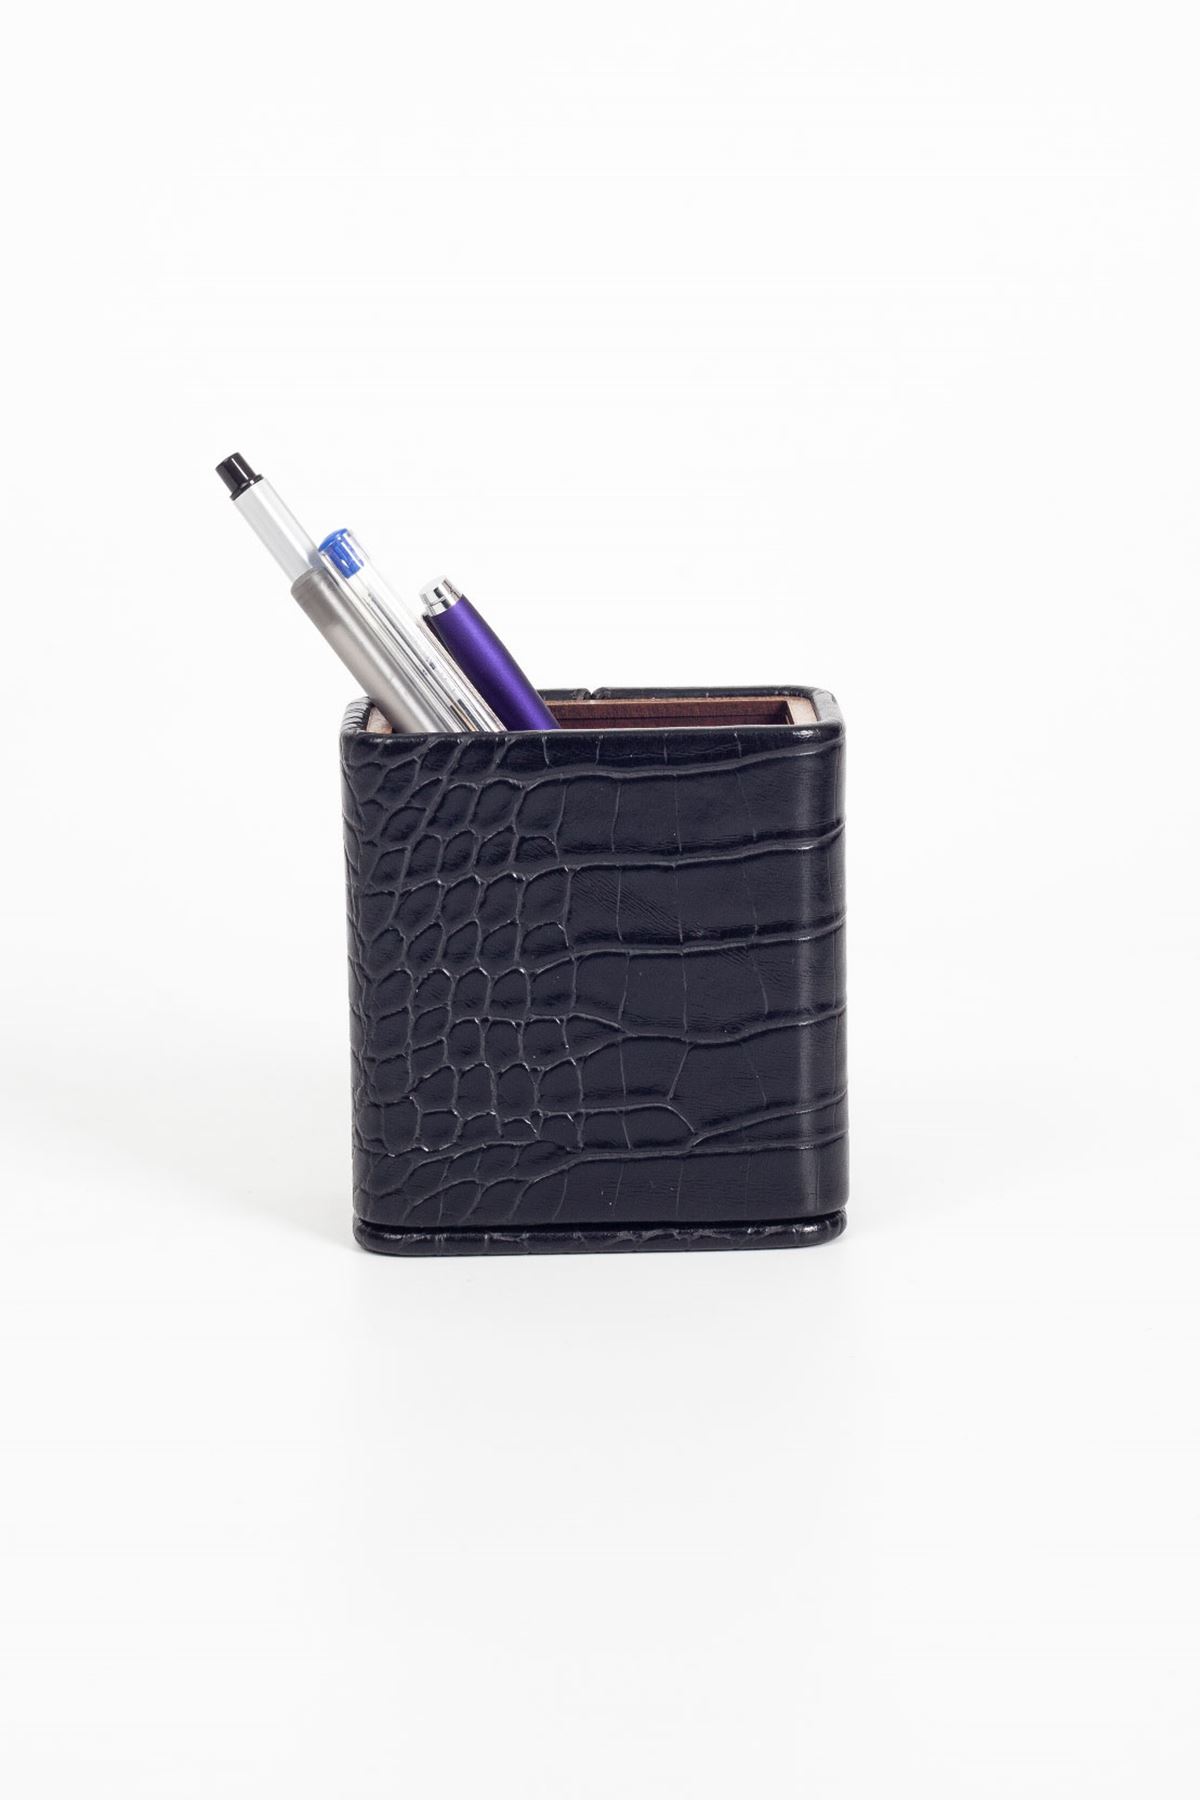 Desktop Croco Leather Pattern and Wooden Detailed Pen Holder